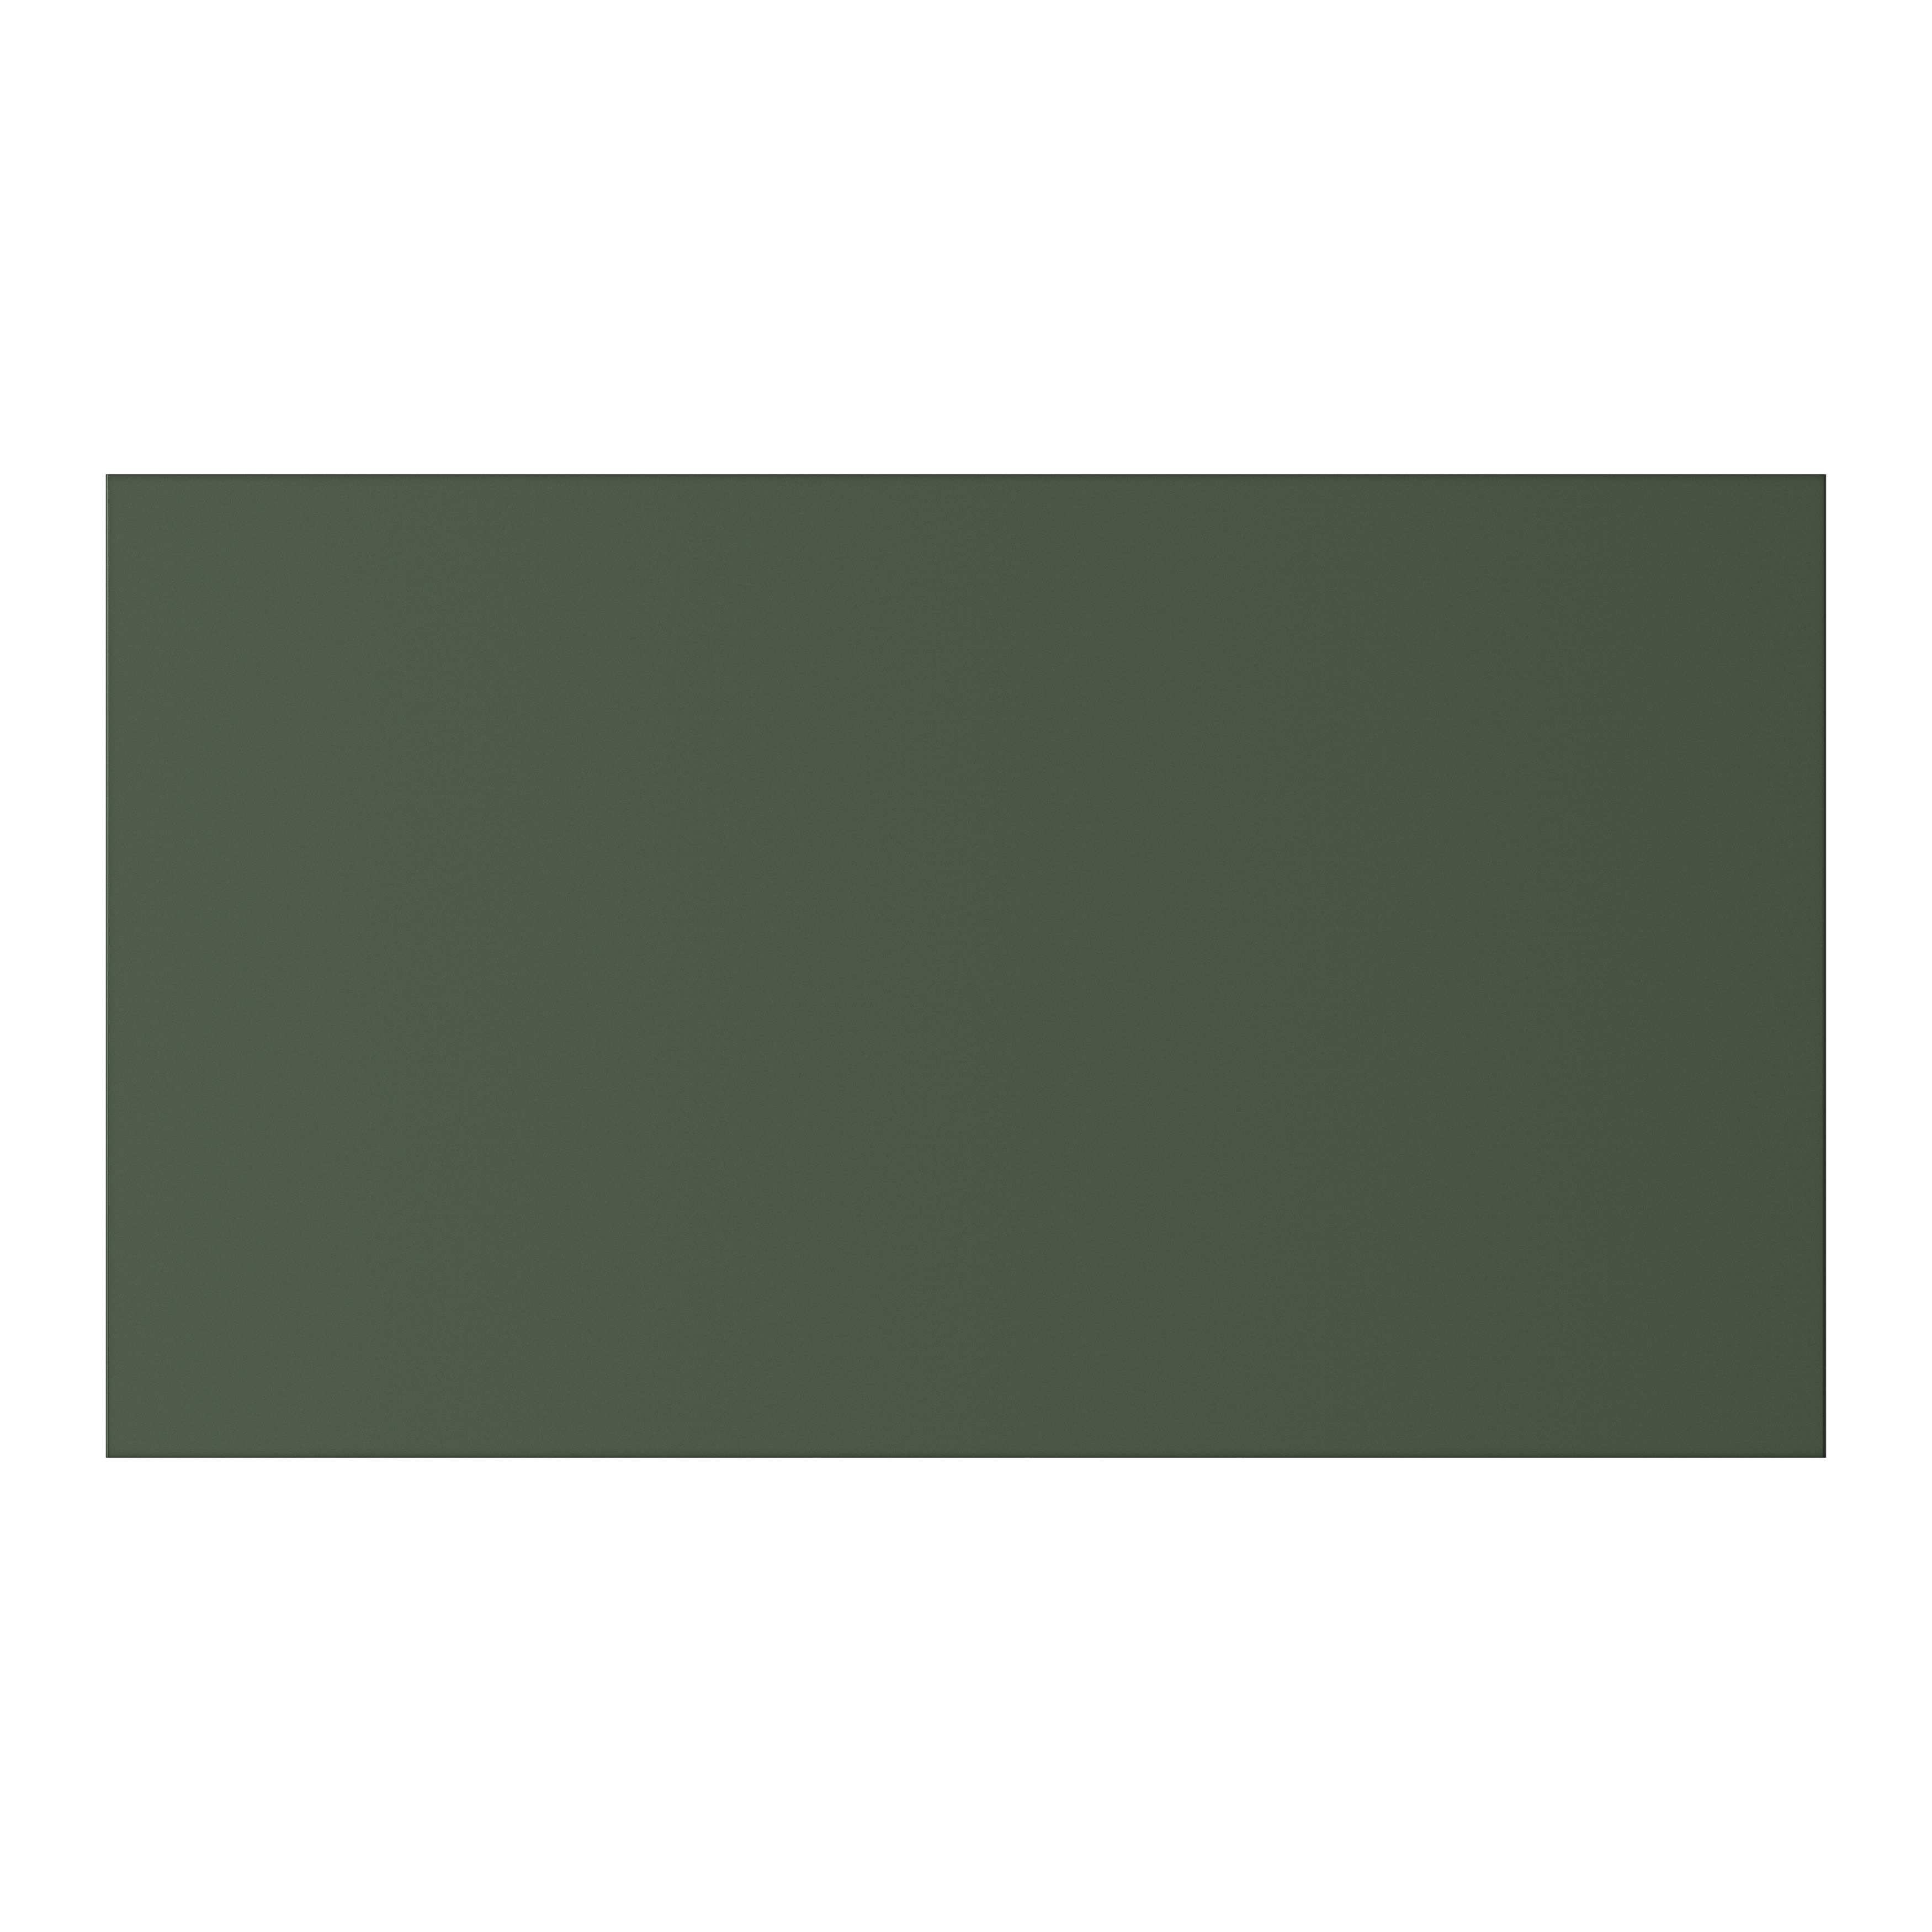 GoodHome Artemisia Matt dark green shaker Standard Base Drawer end panel (H)340mm (W)595mm